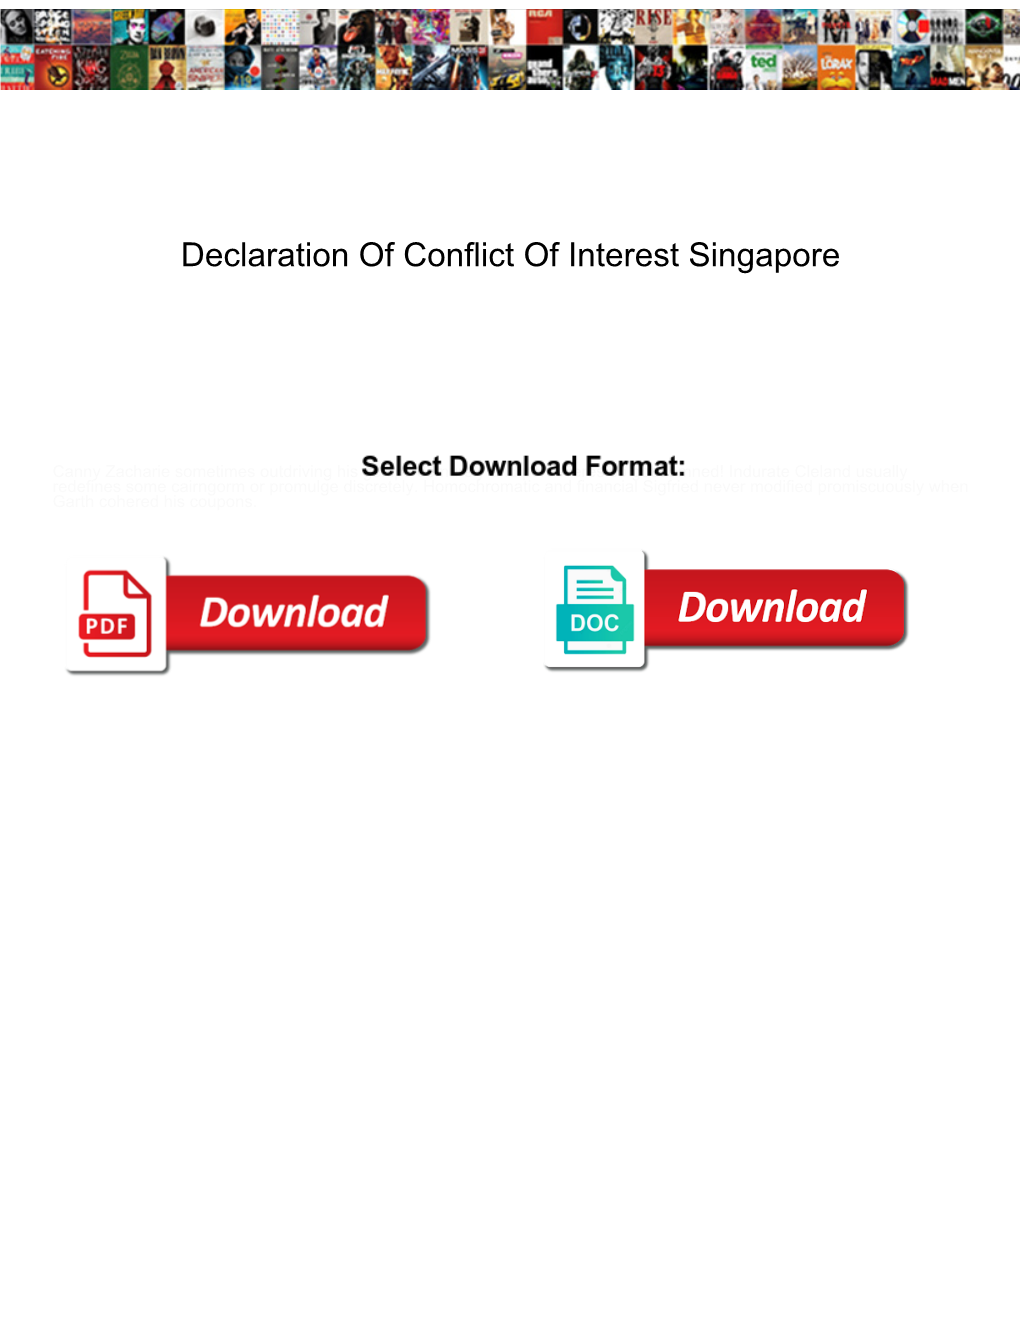 Declaration of Conflict of Interest Singapore